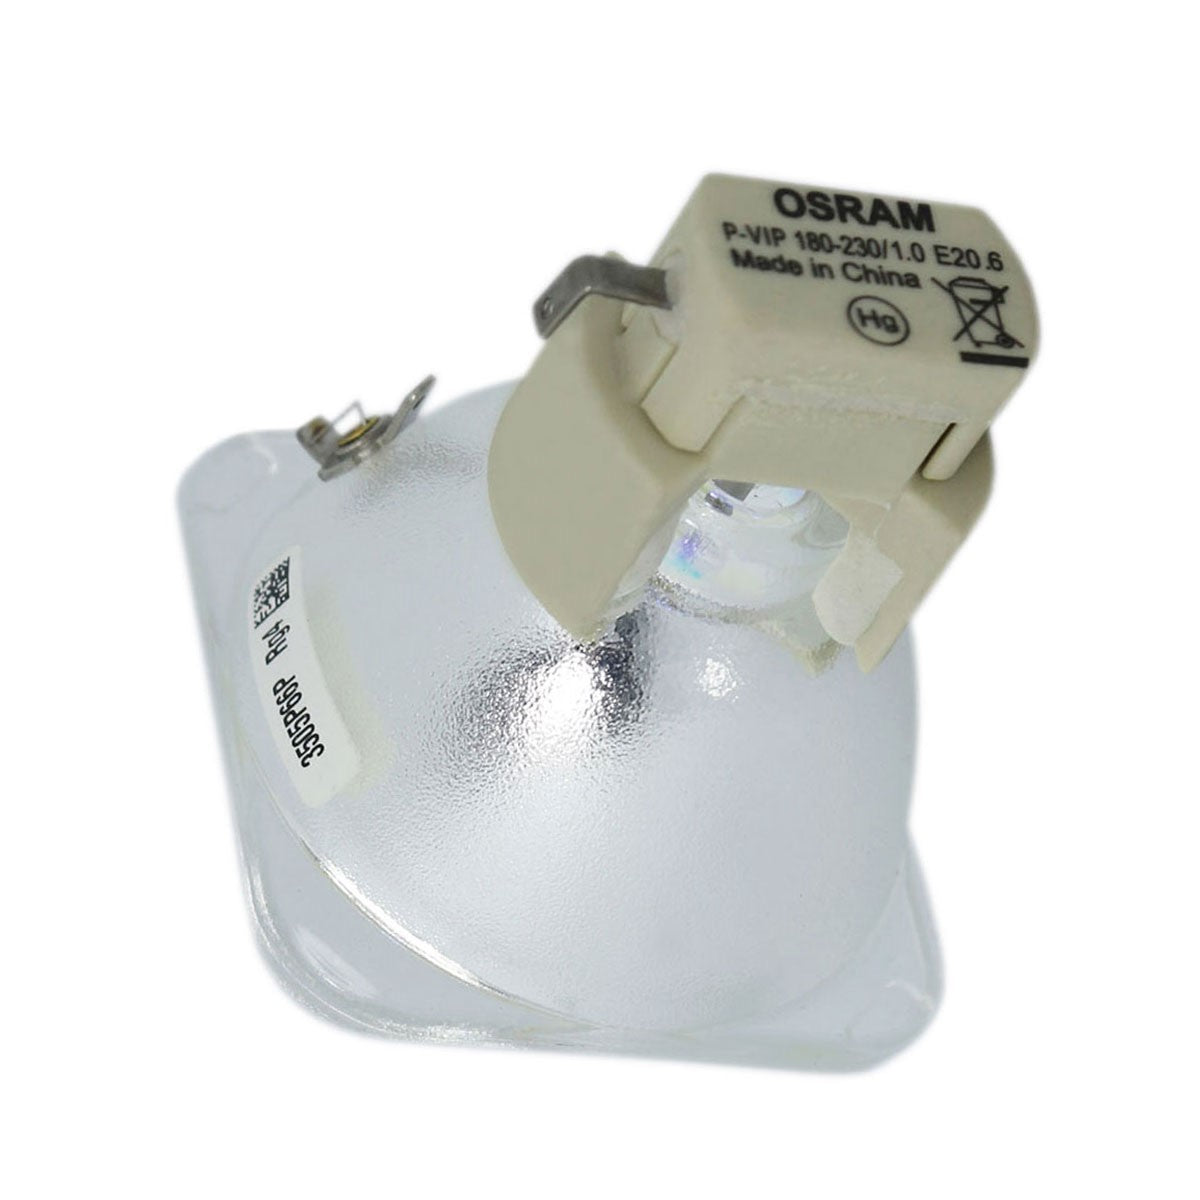 Hitachi DT01461 Osram Projector Bare Lamp